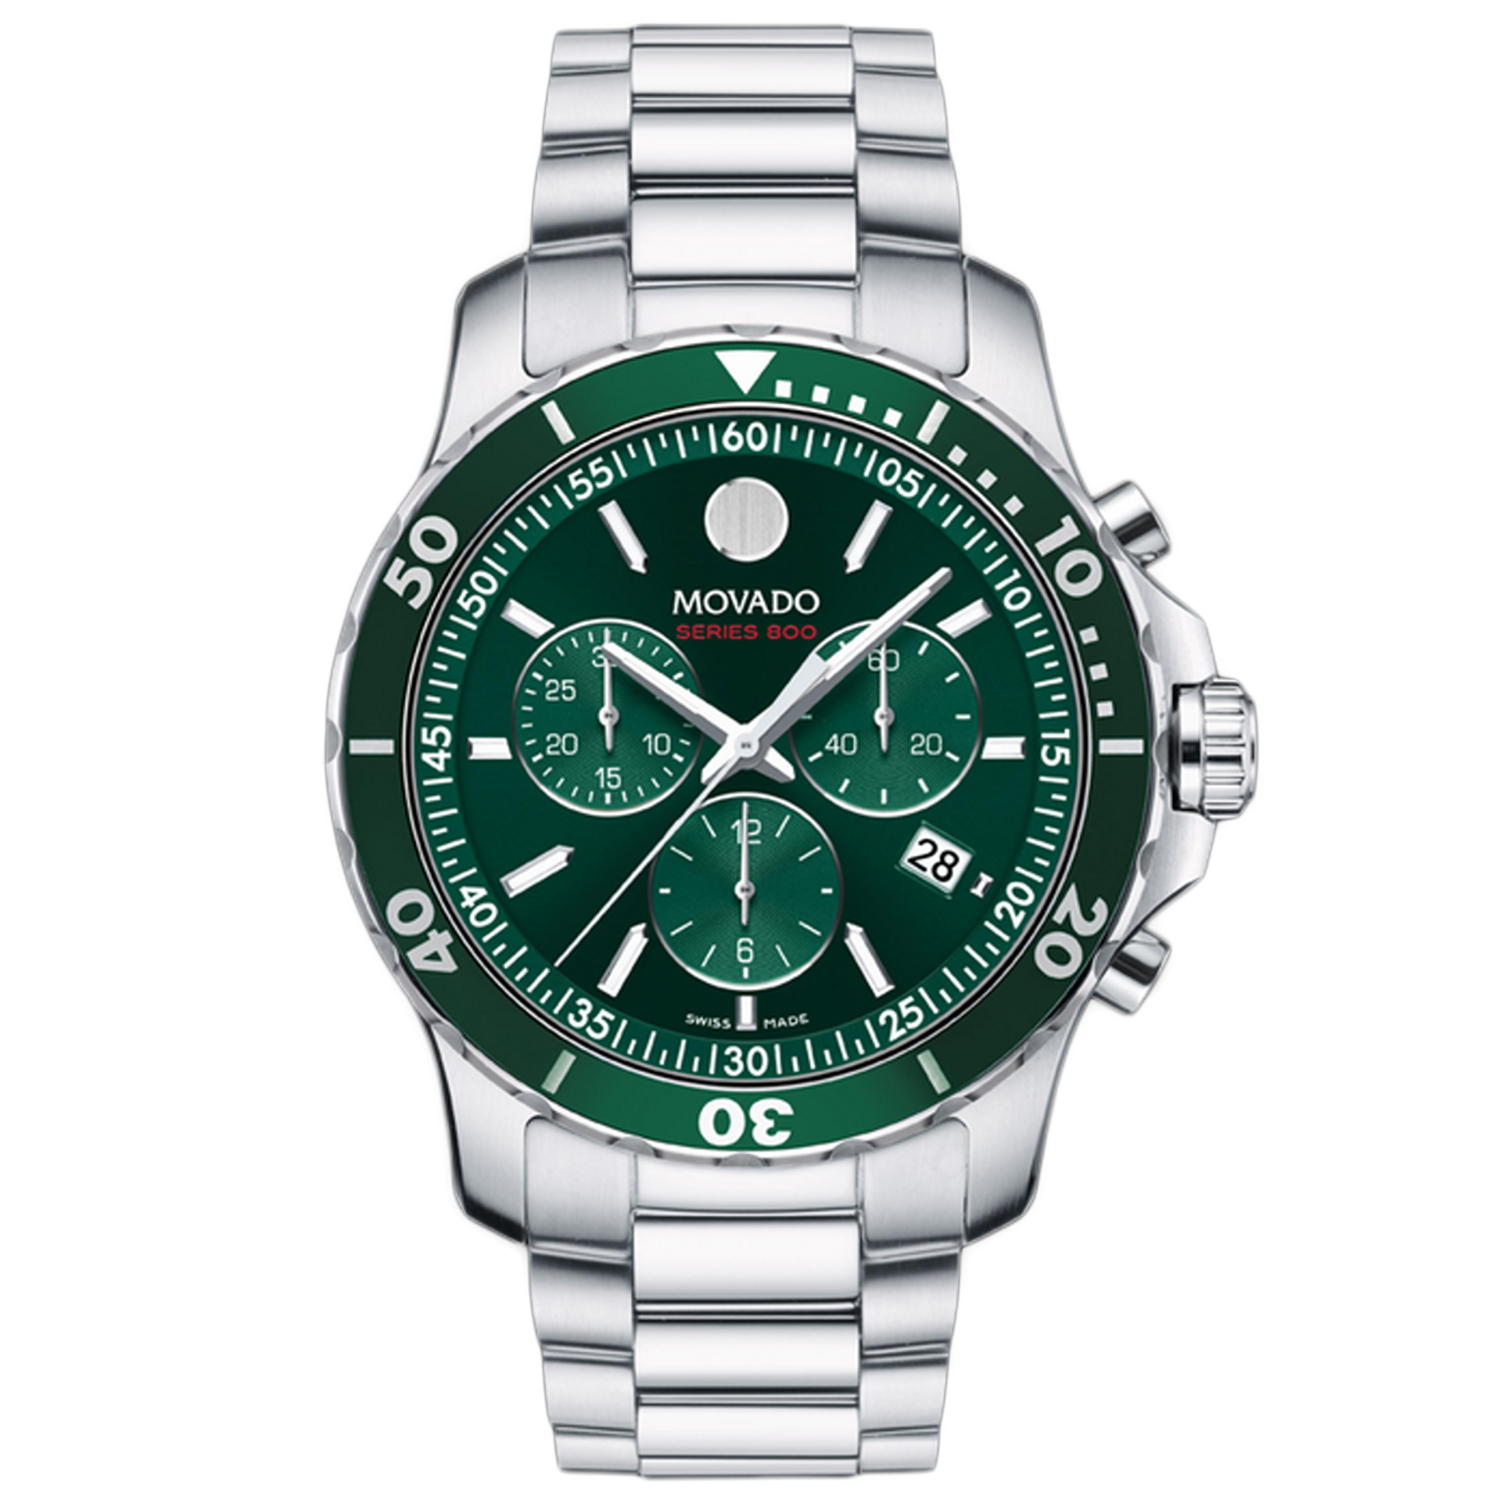 Movado Men's Series 800 Green Dial Watch - 2600179